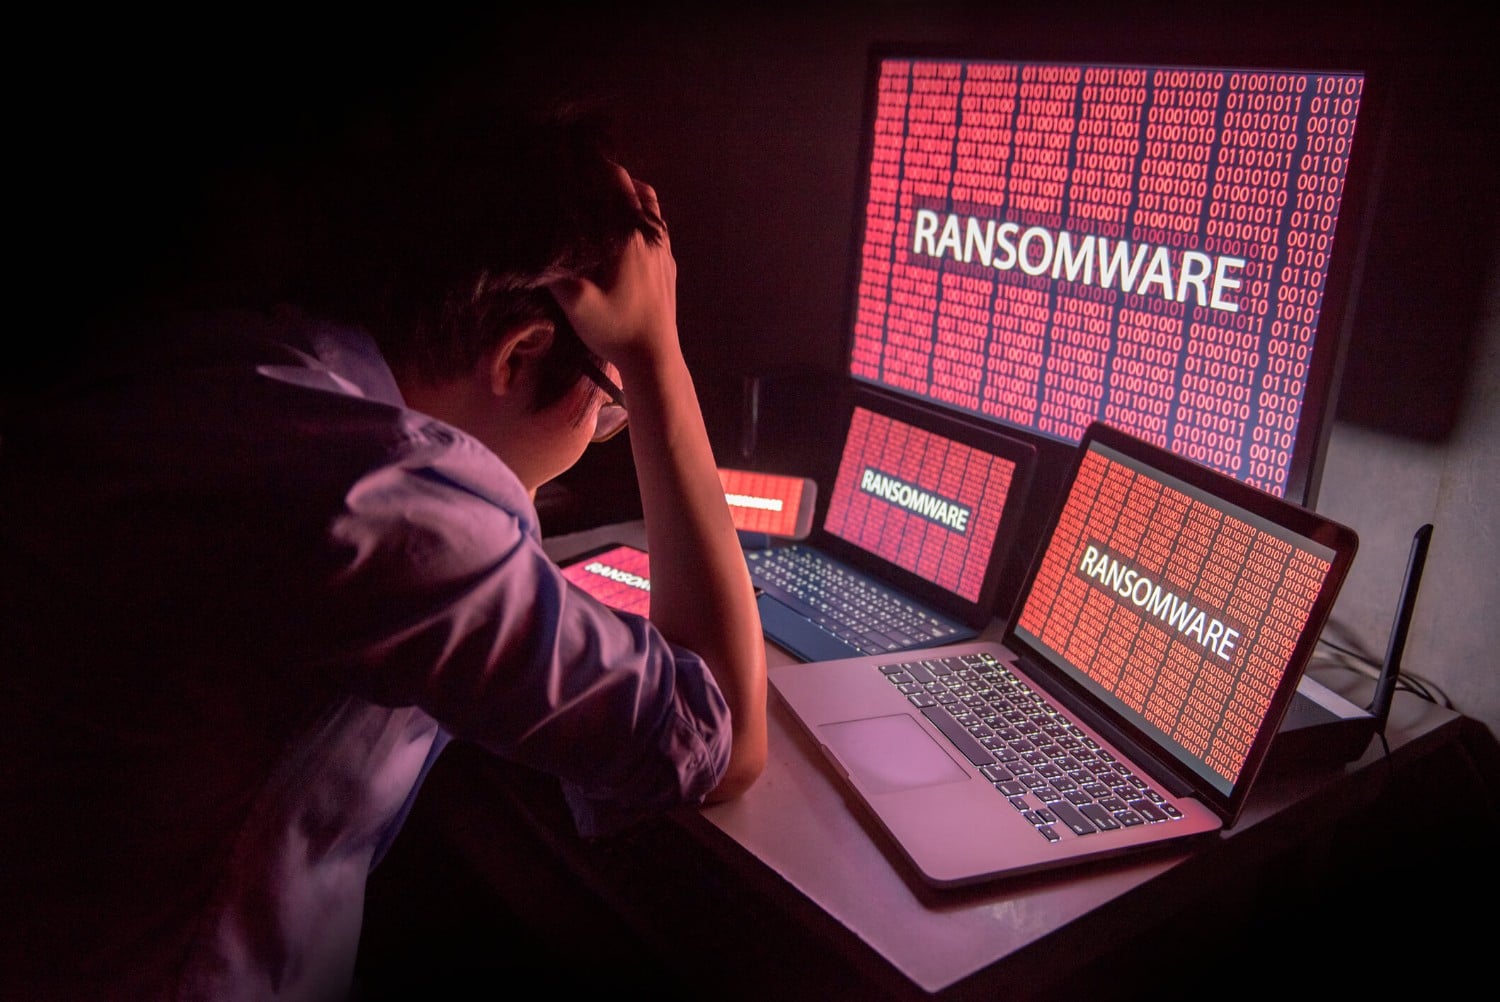 analise-da-check-point-do-ataque-de-ransomware-sofrido-pela-sonicwall